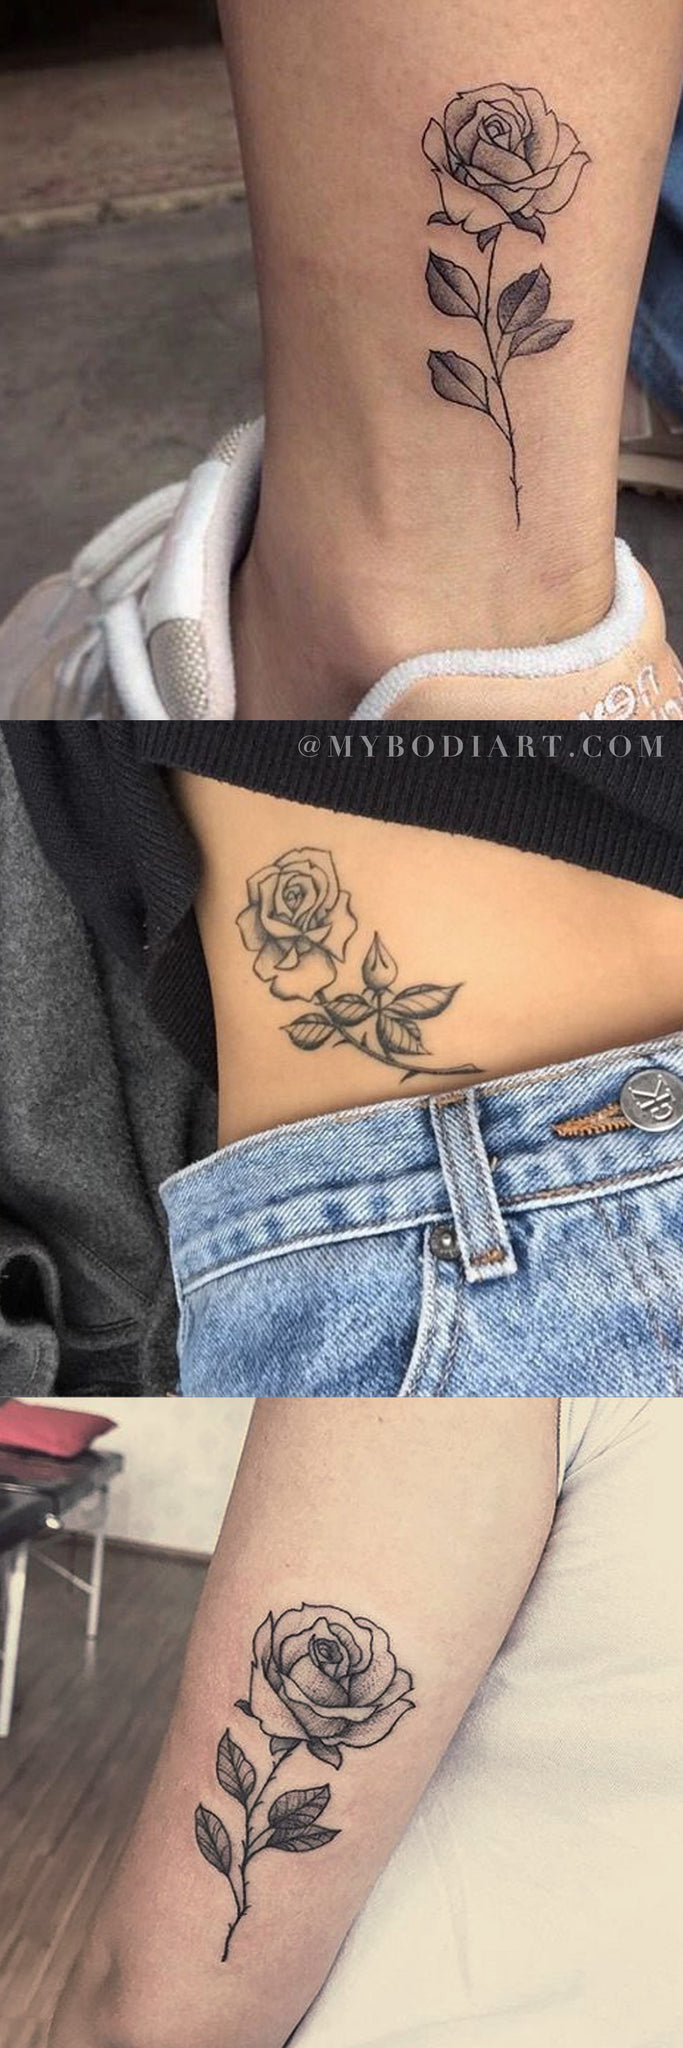 Small Simple Single Black Rose Tattoo Ideas for Women -  pequeñas ideas individuales simples del tatuaje de la rosa negra para las mujeres - www.MyBodiArt.com